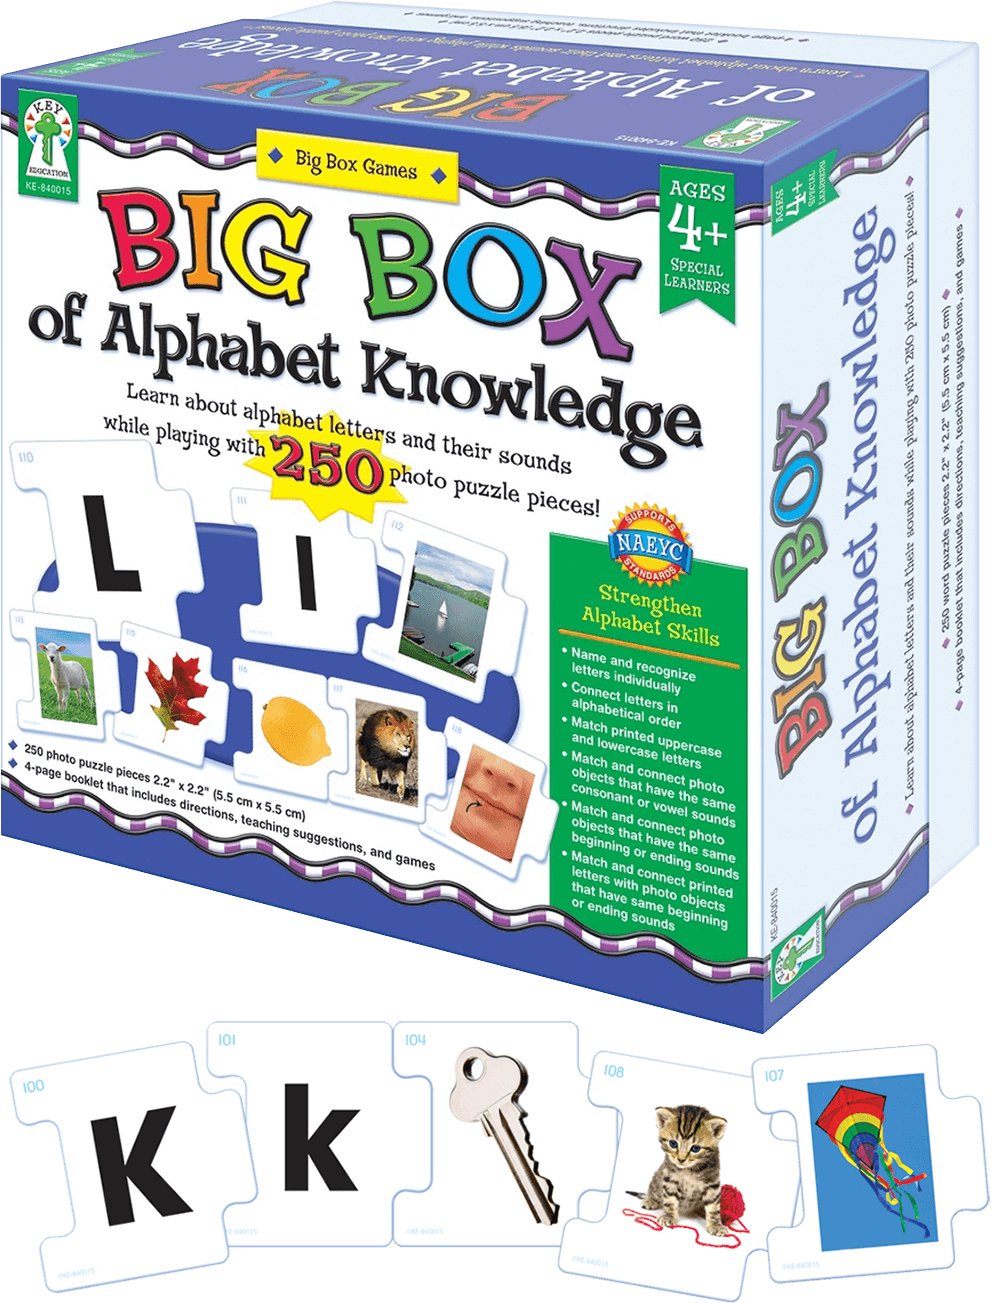 The Big Box of Alphabet Knowledge